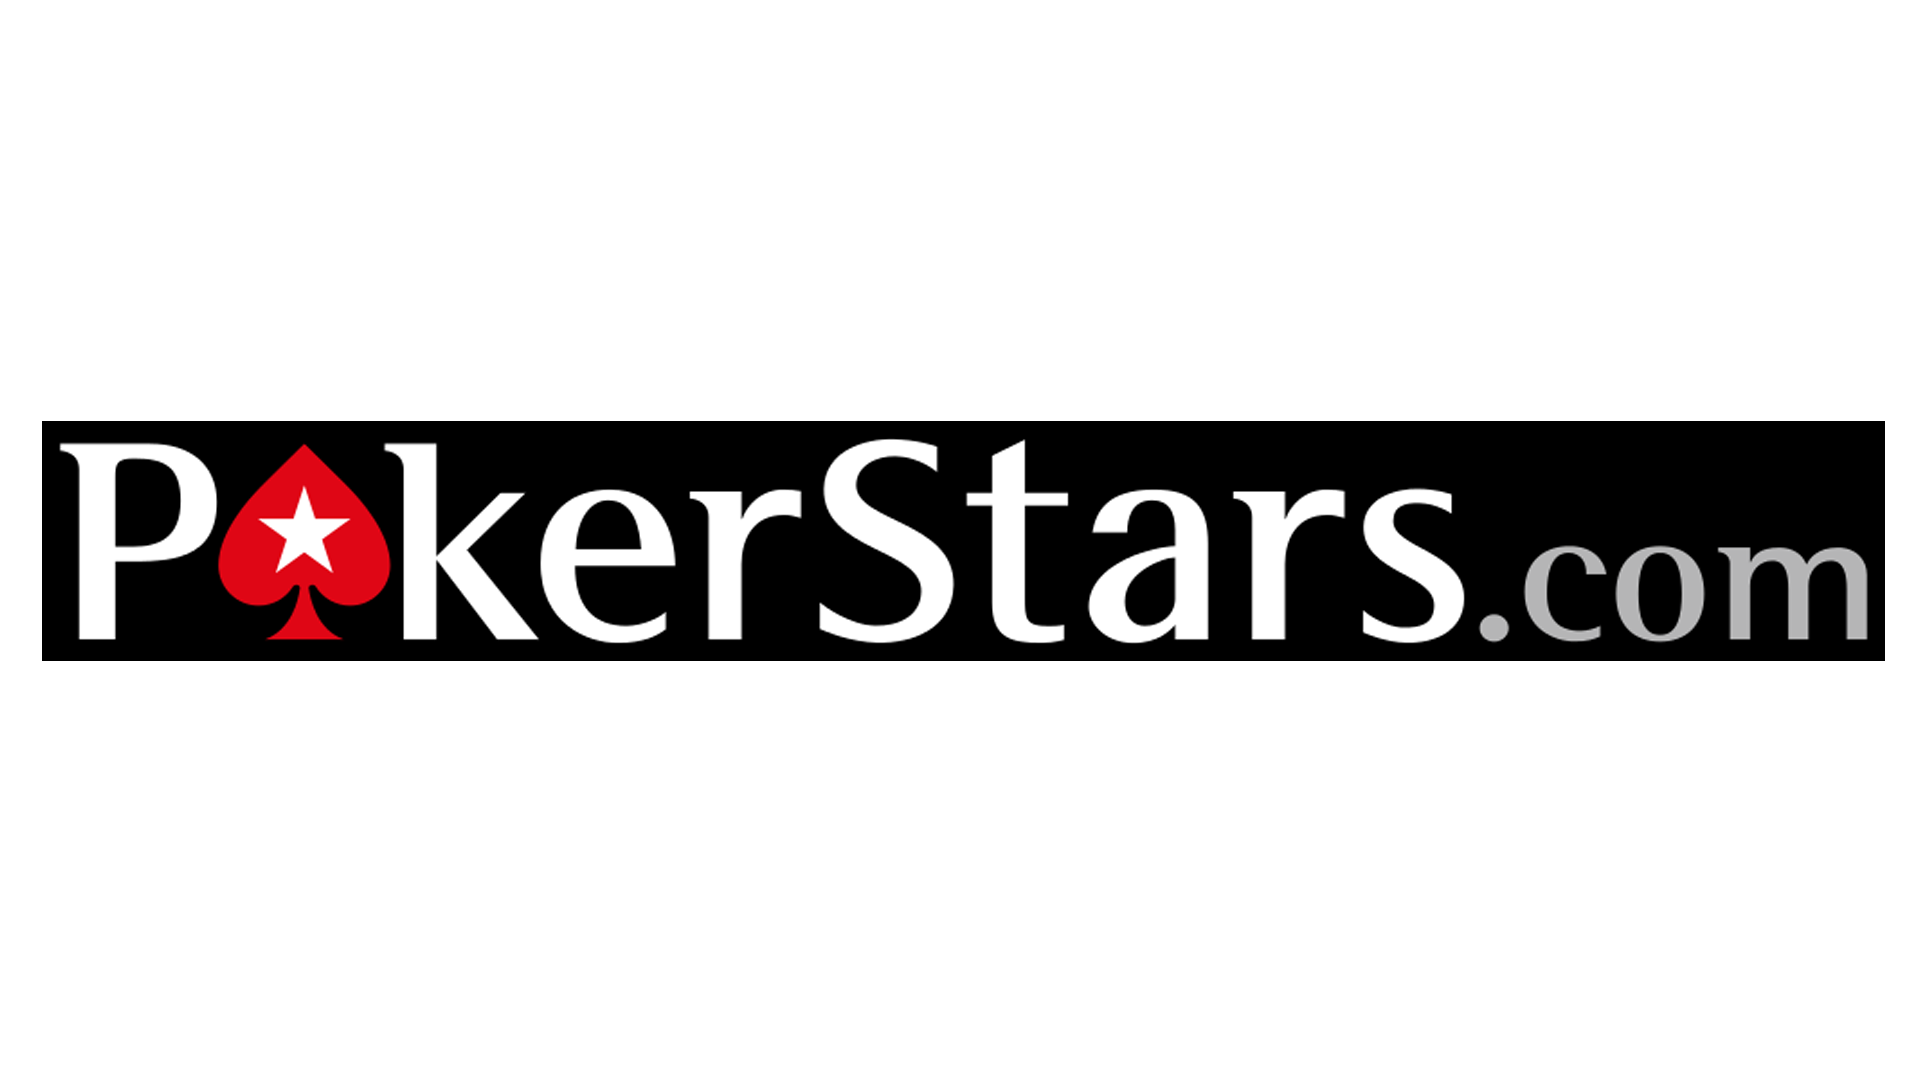 Poker stars com. Покерстарс. Pokerstars лого. Покер старс логотип вектор. Пика Покер старс.